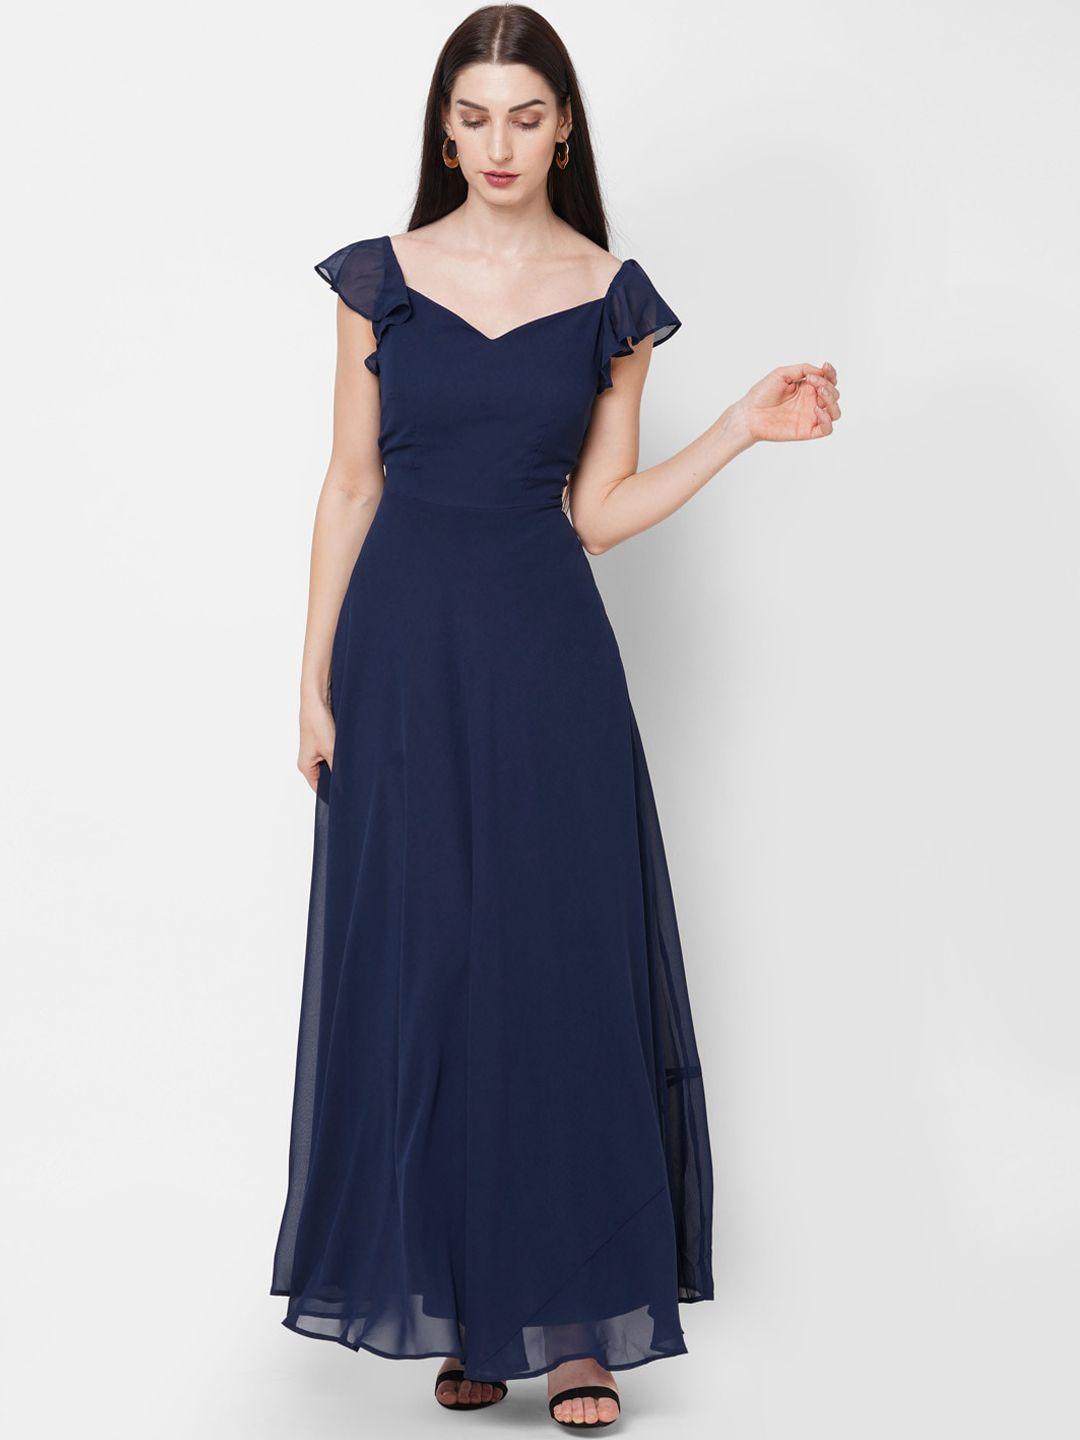 20dresses women navy blue georgette maxi dress